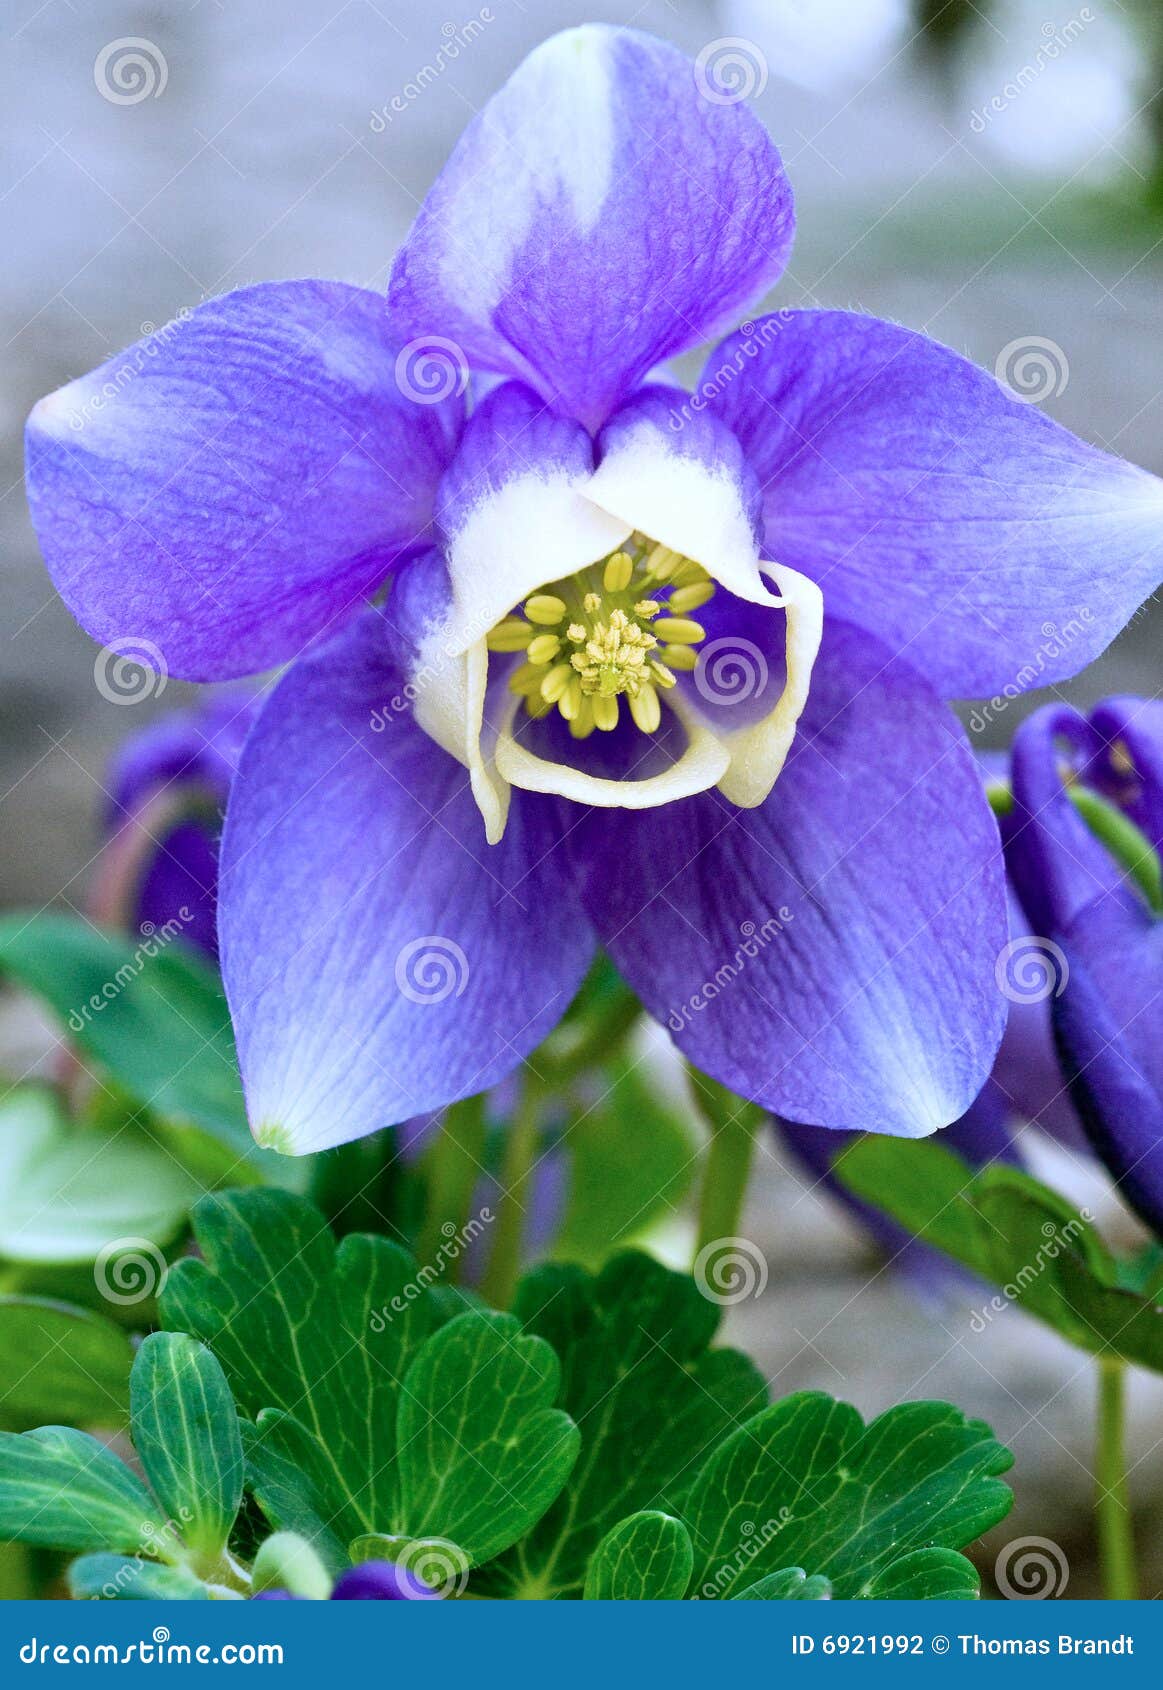 single blue and white dwarf aquilegia flower